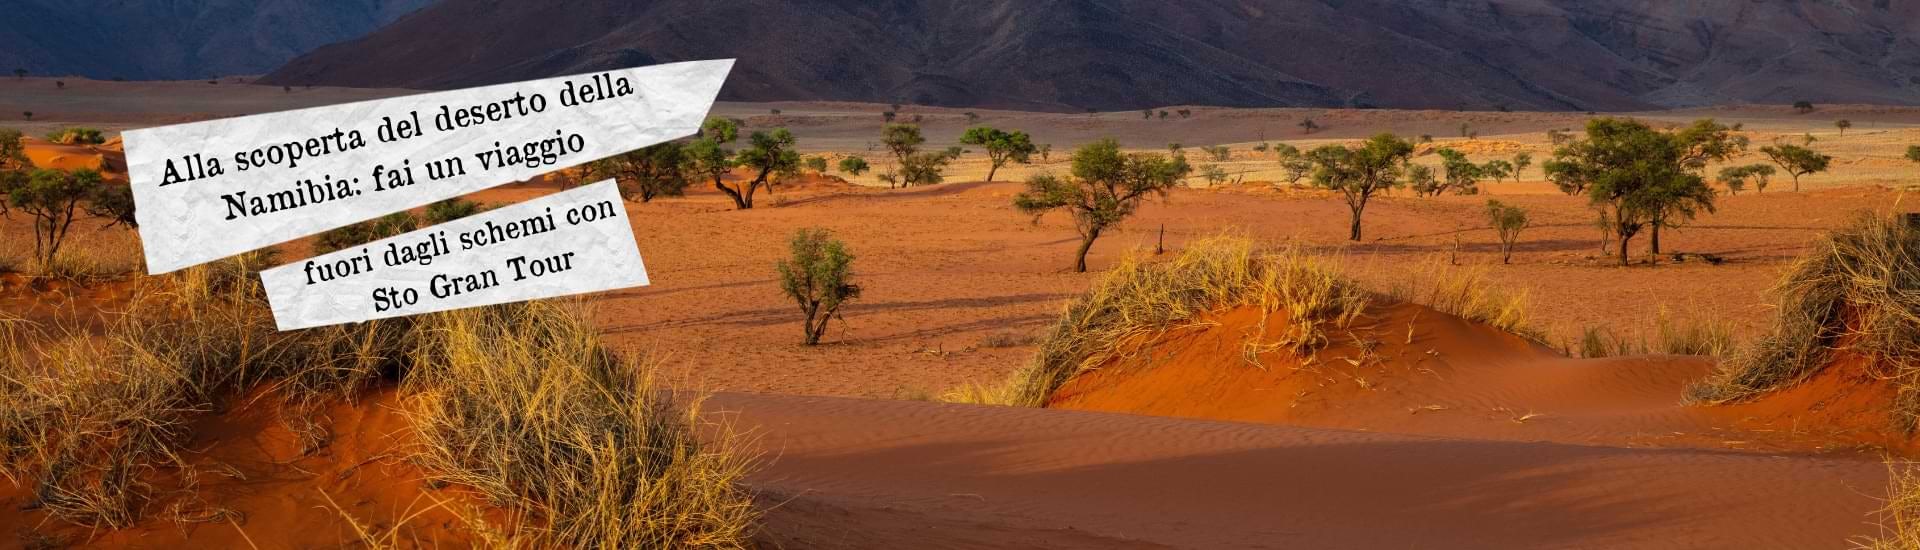 deserto namibia larga